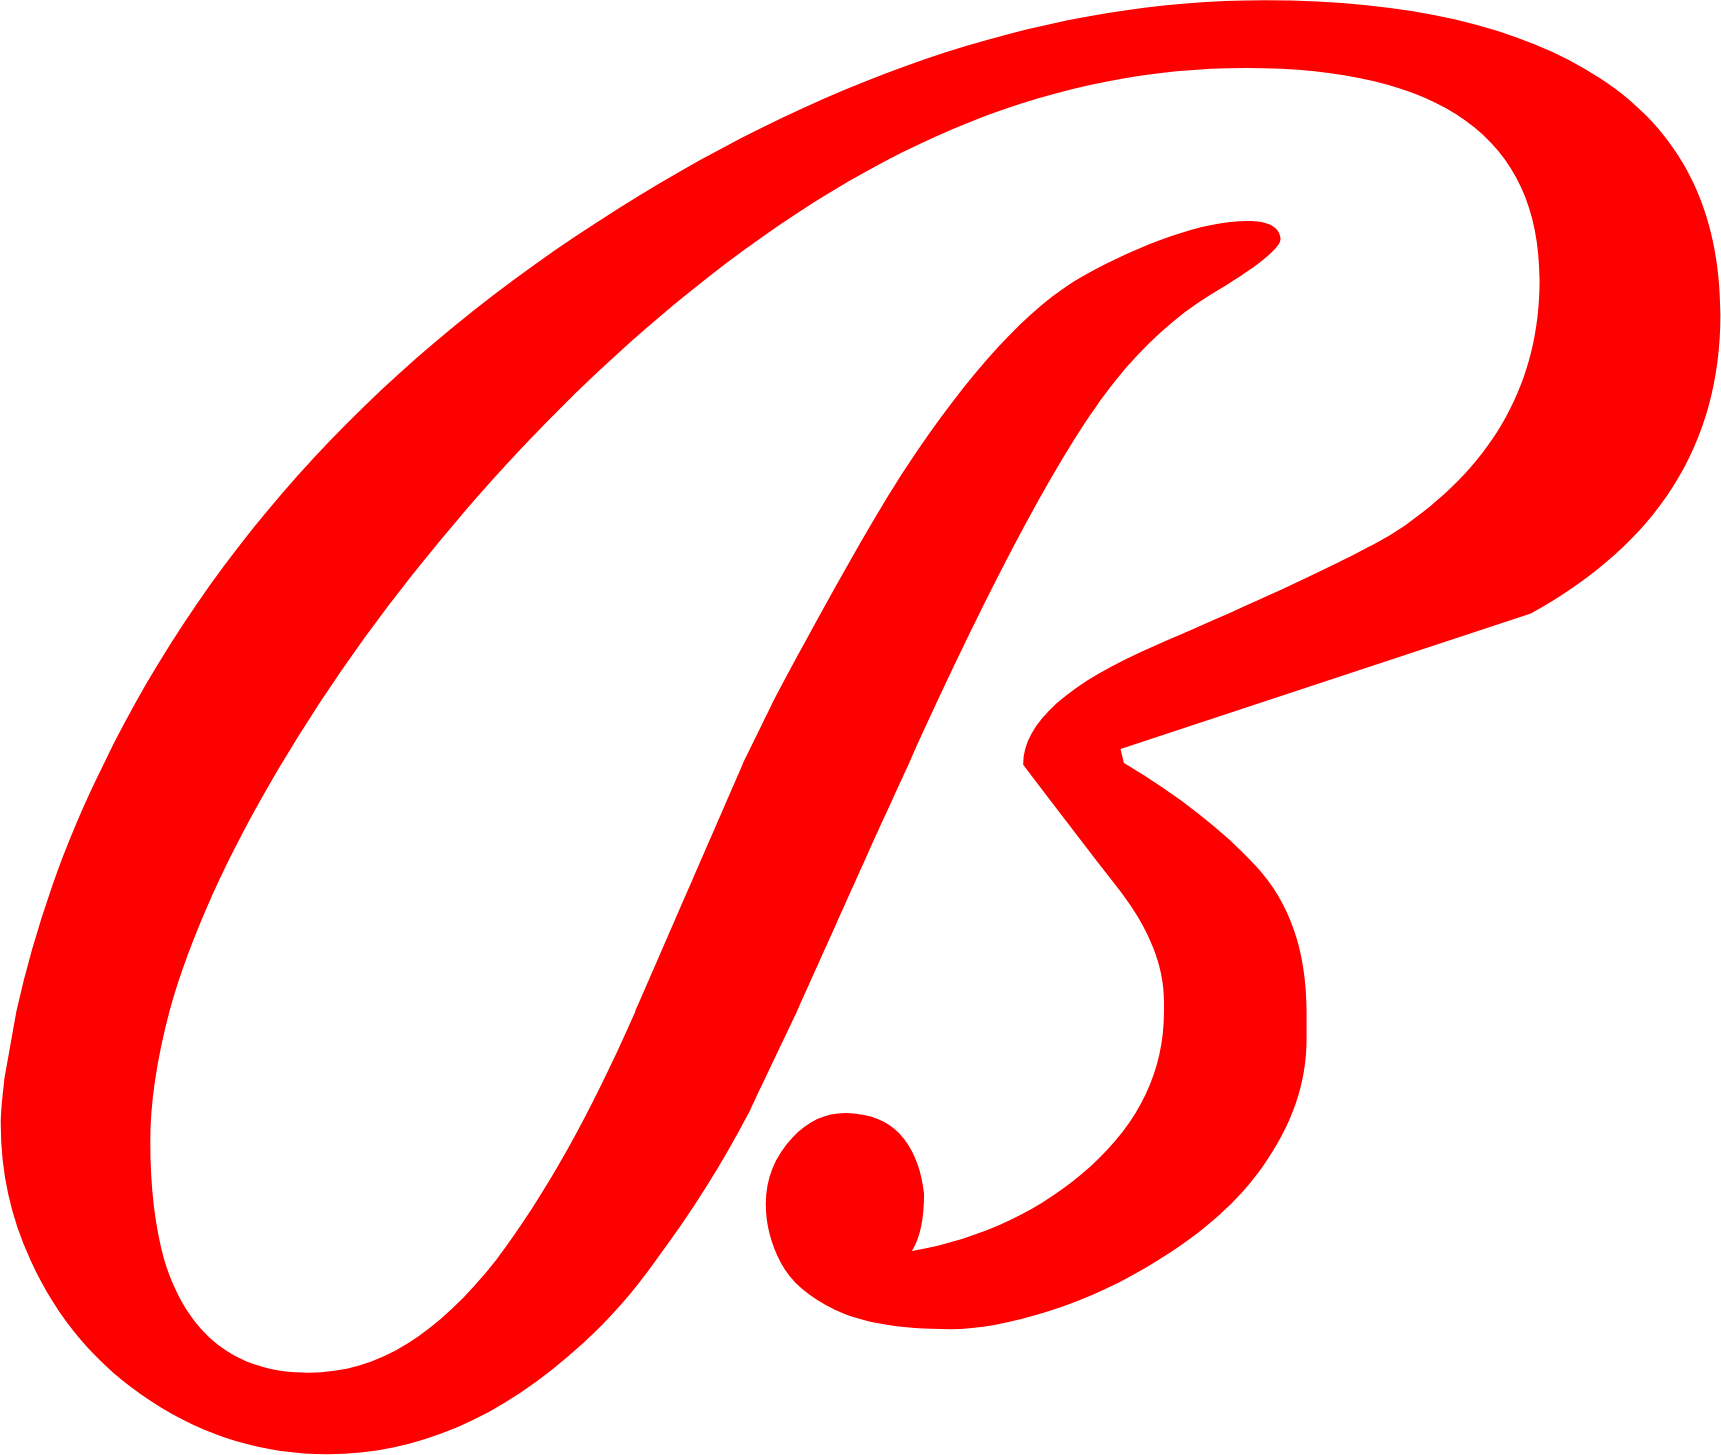 Bally's Corporation logo (PNG transparent)